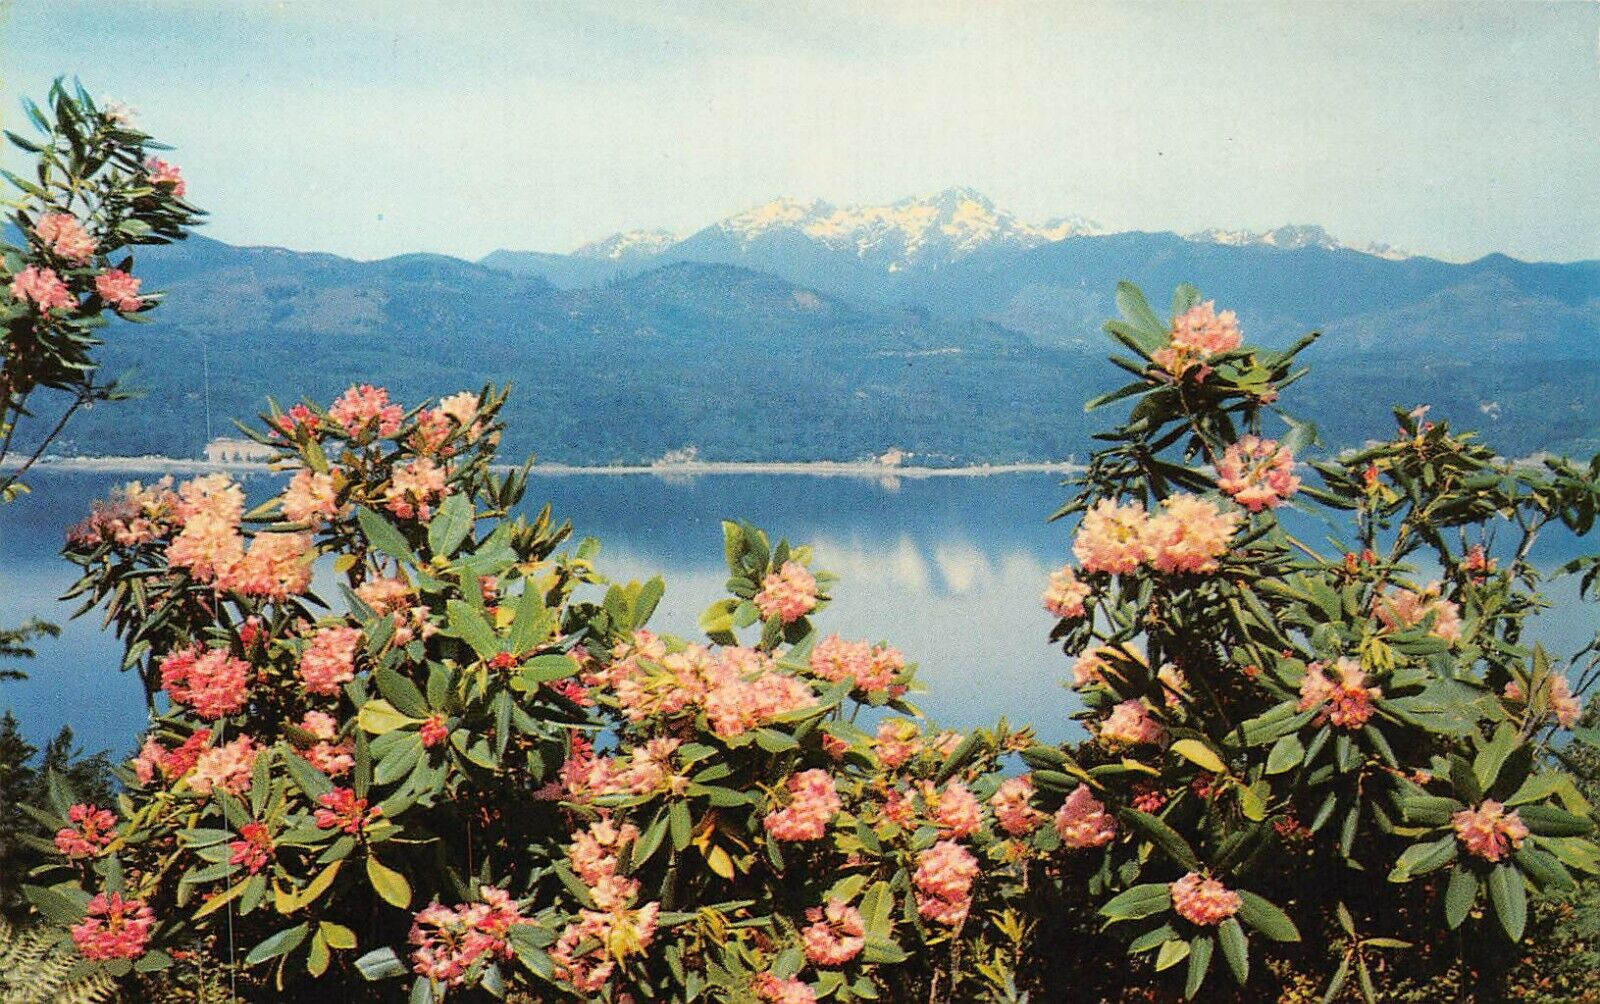 Mt Mount Olympus WA Washington Olympic Peninsula National park Vtg Postcard A1